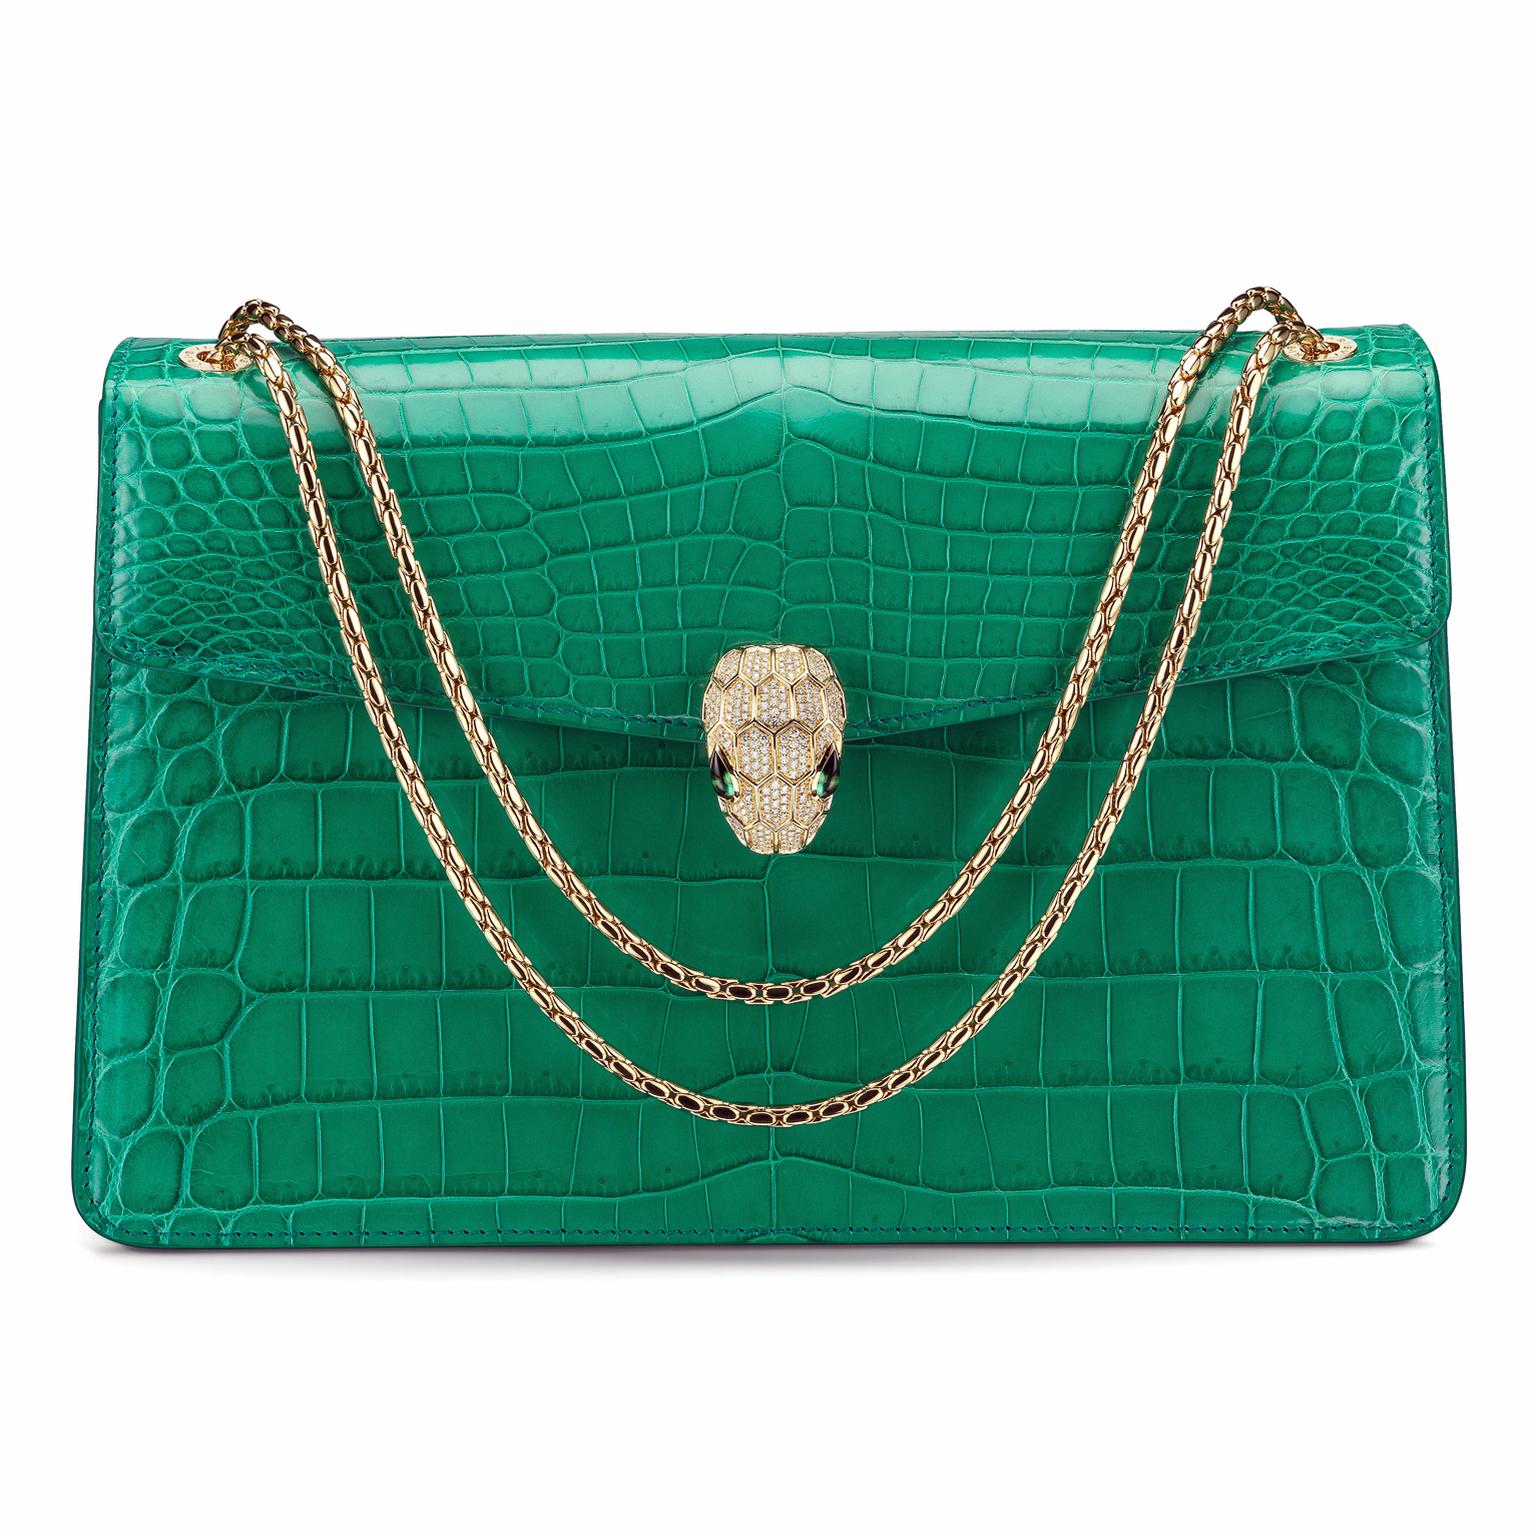 Bulgari Serpenti Forever emerald green crocodile skin handbag